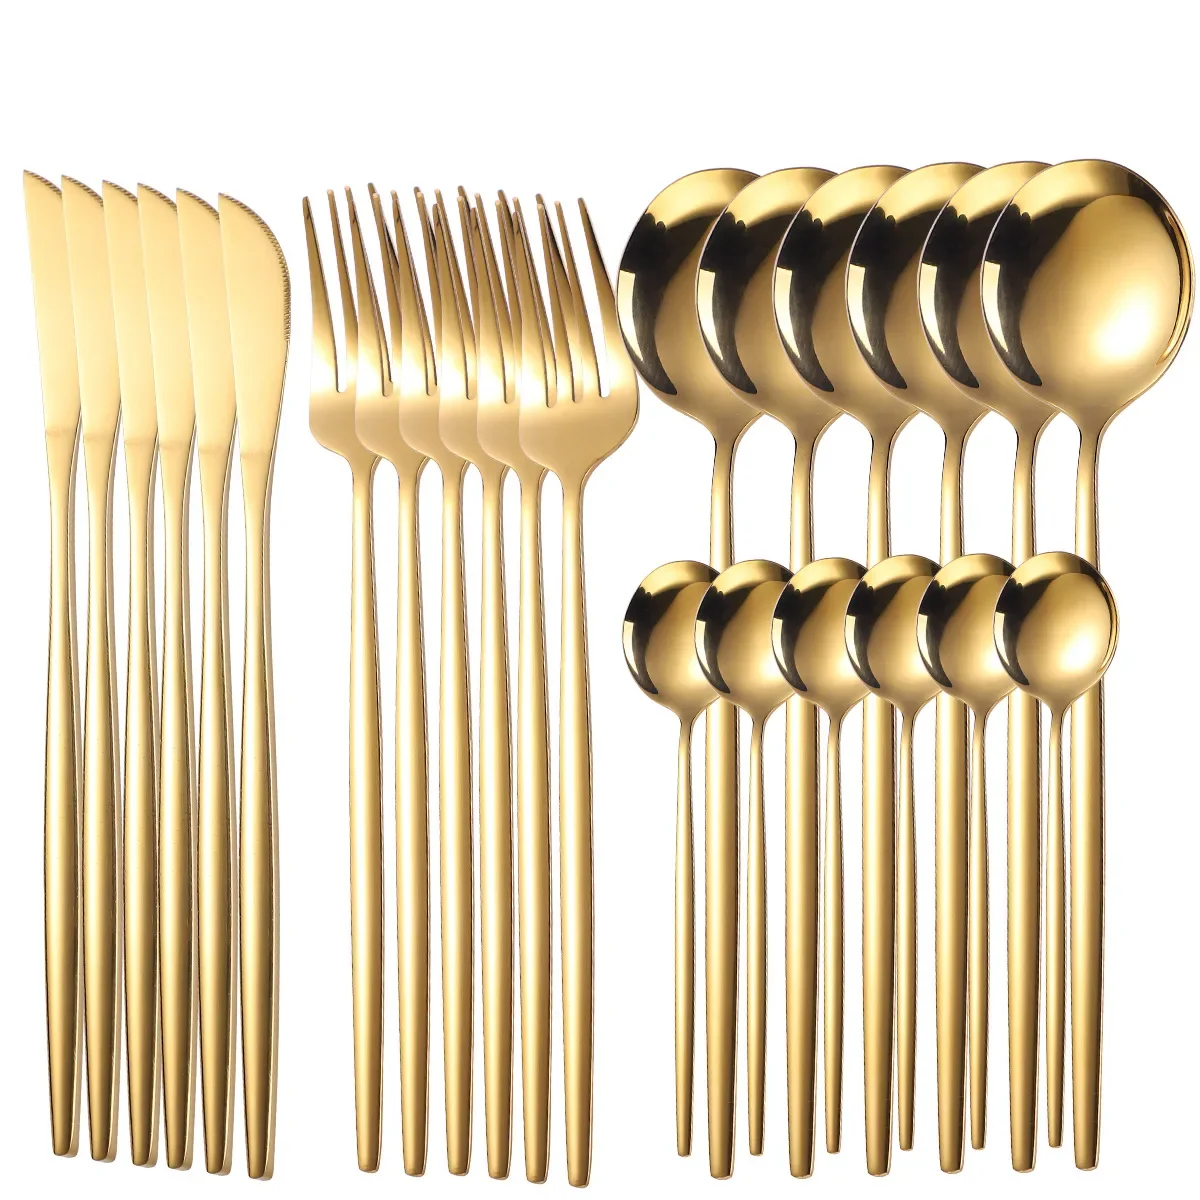 

24pcs Gold Dinnerware Set Stainless Steel Tableware Set Knife Fork Spoon Flatware Set Cutlery Set Bright Light